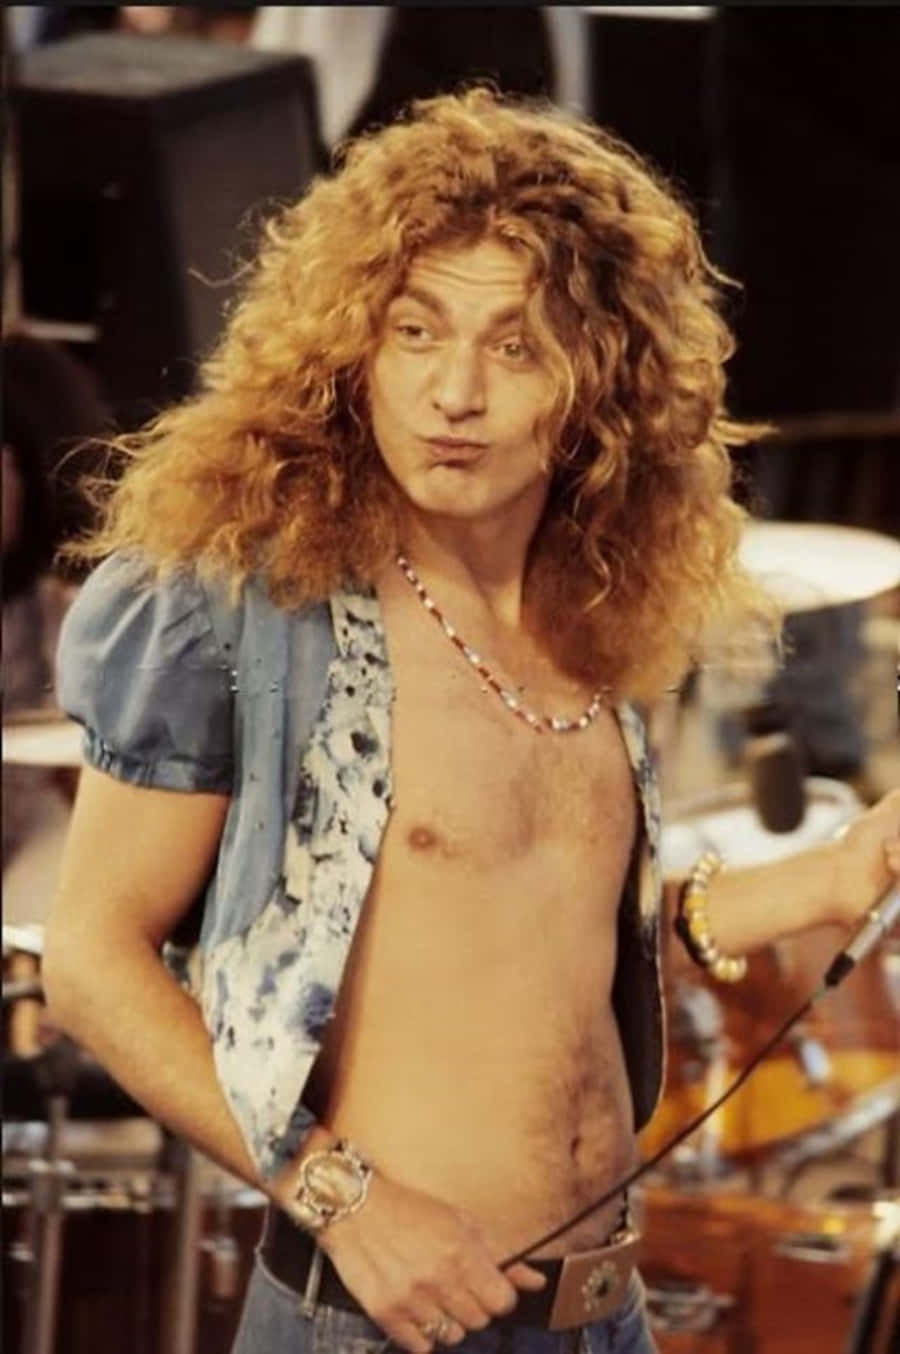 Rock legend Robert Plant jamming on stage